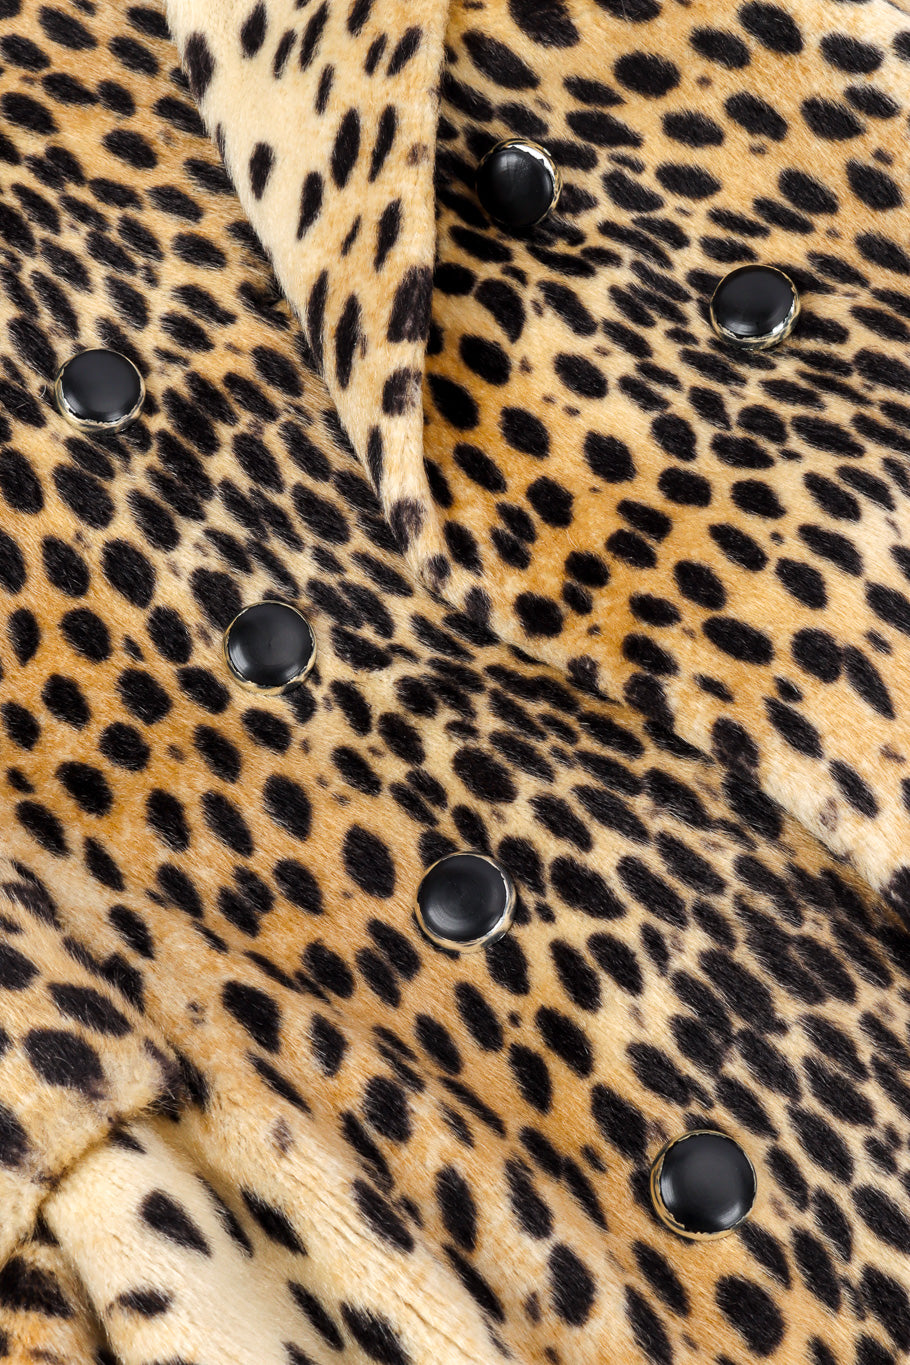 Cheetah Print Fur Coat by Russel Tayler buttons @recessla